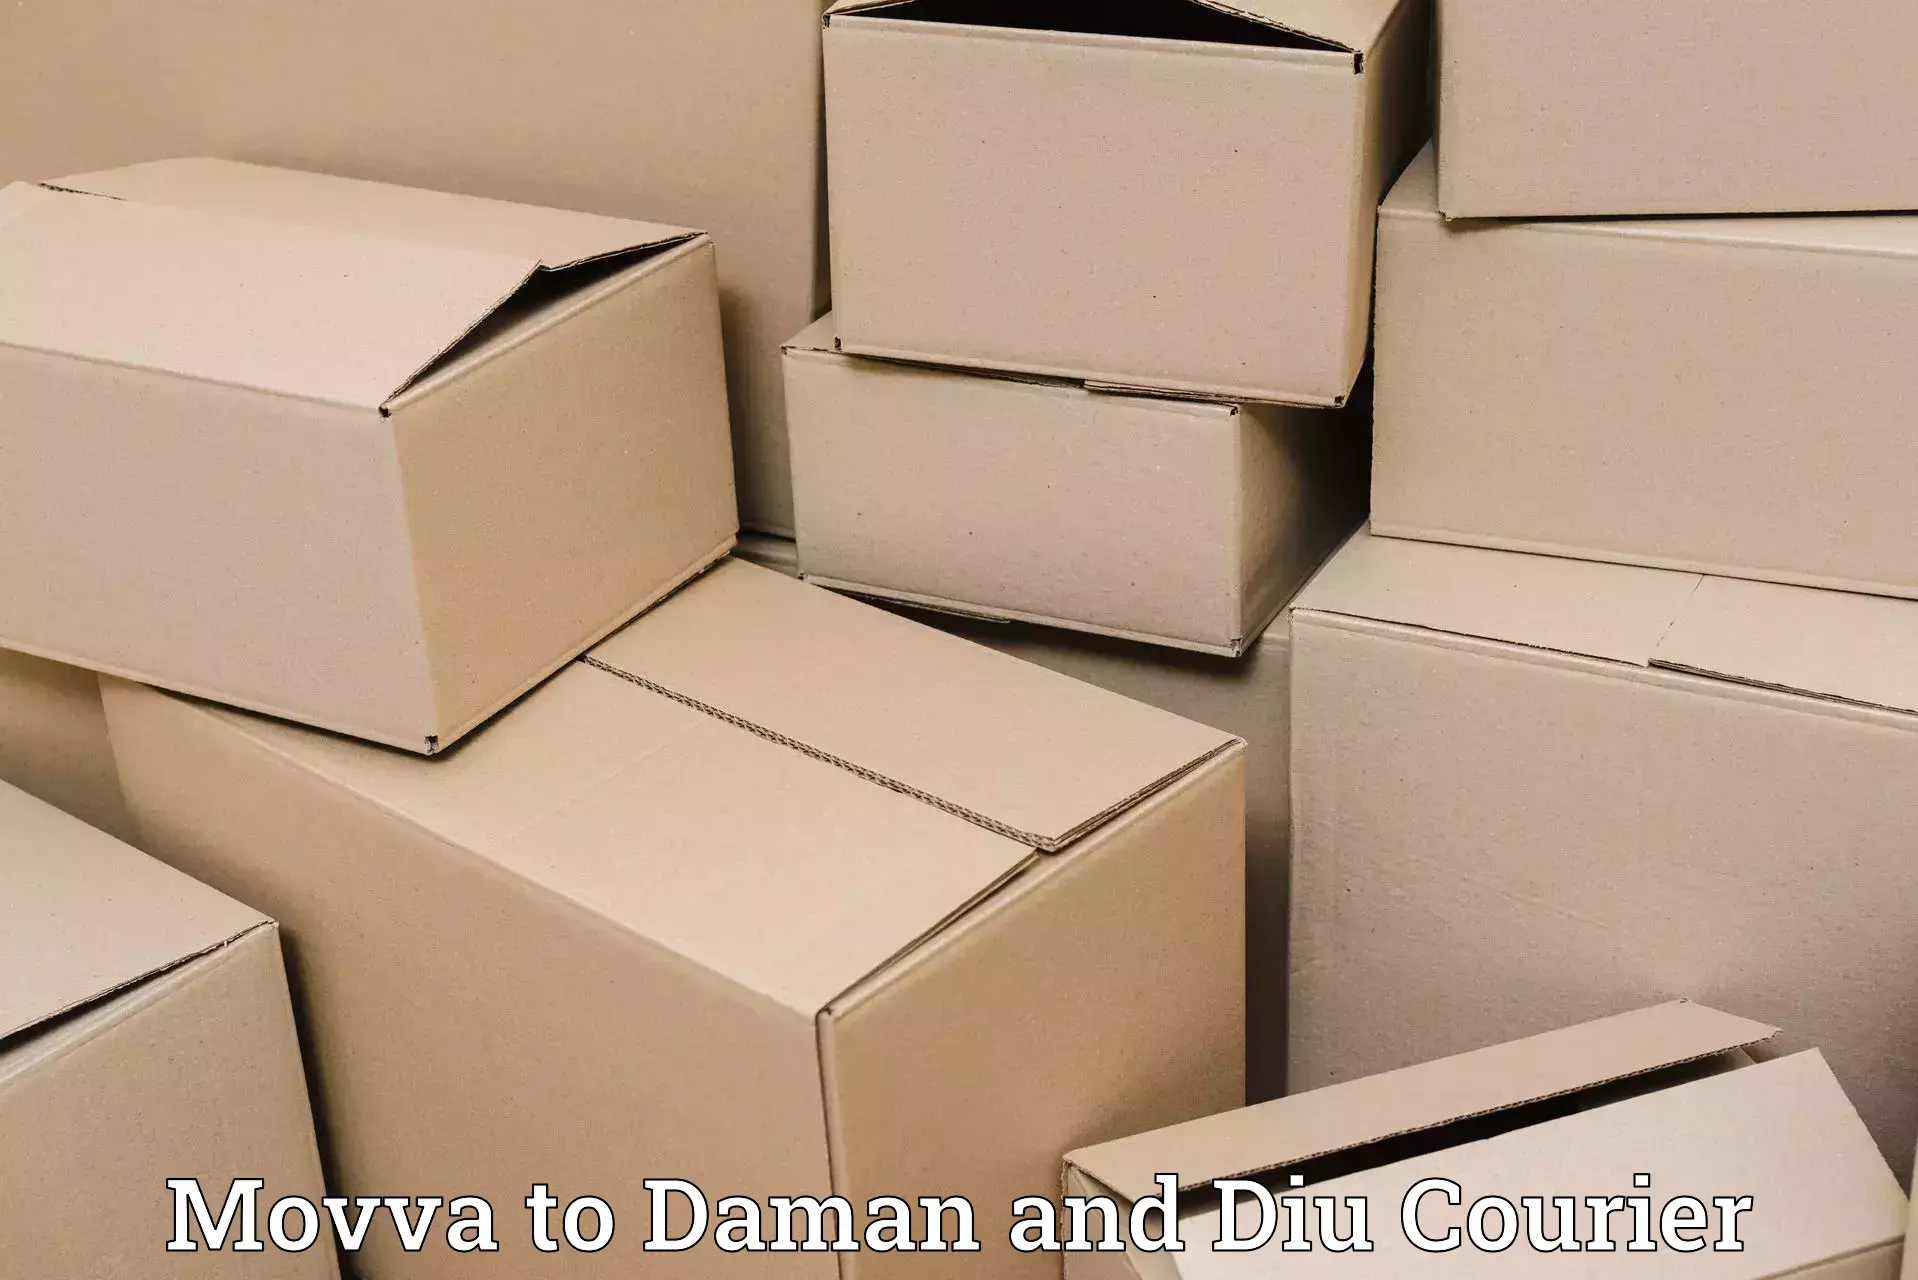 Effective logistics strategies Movva to Daman and Diu